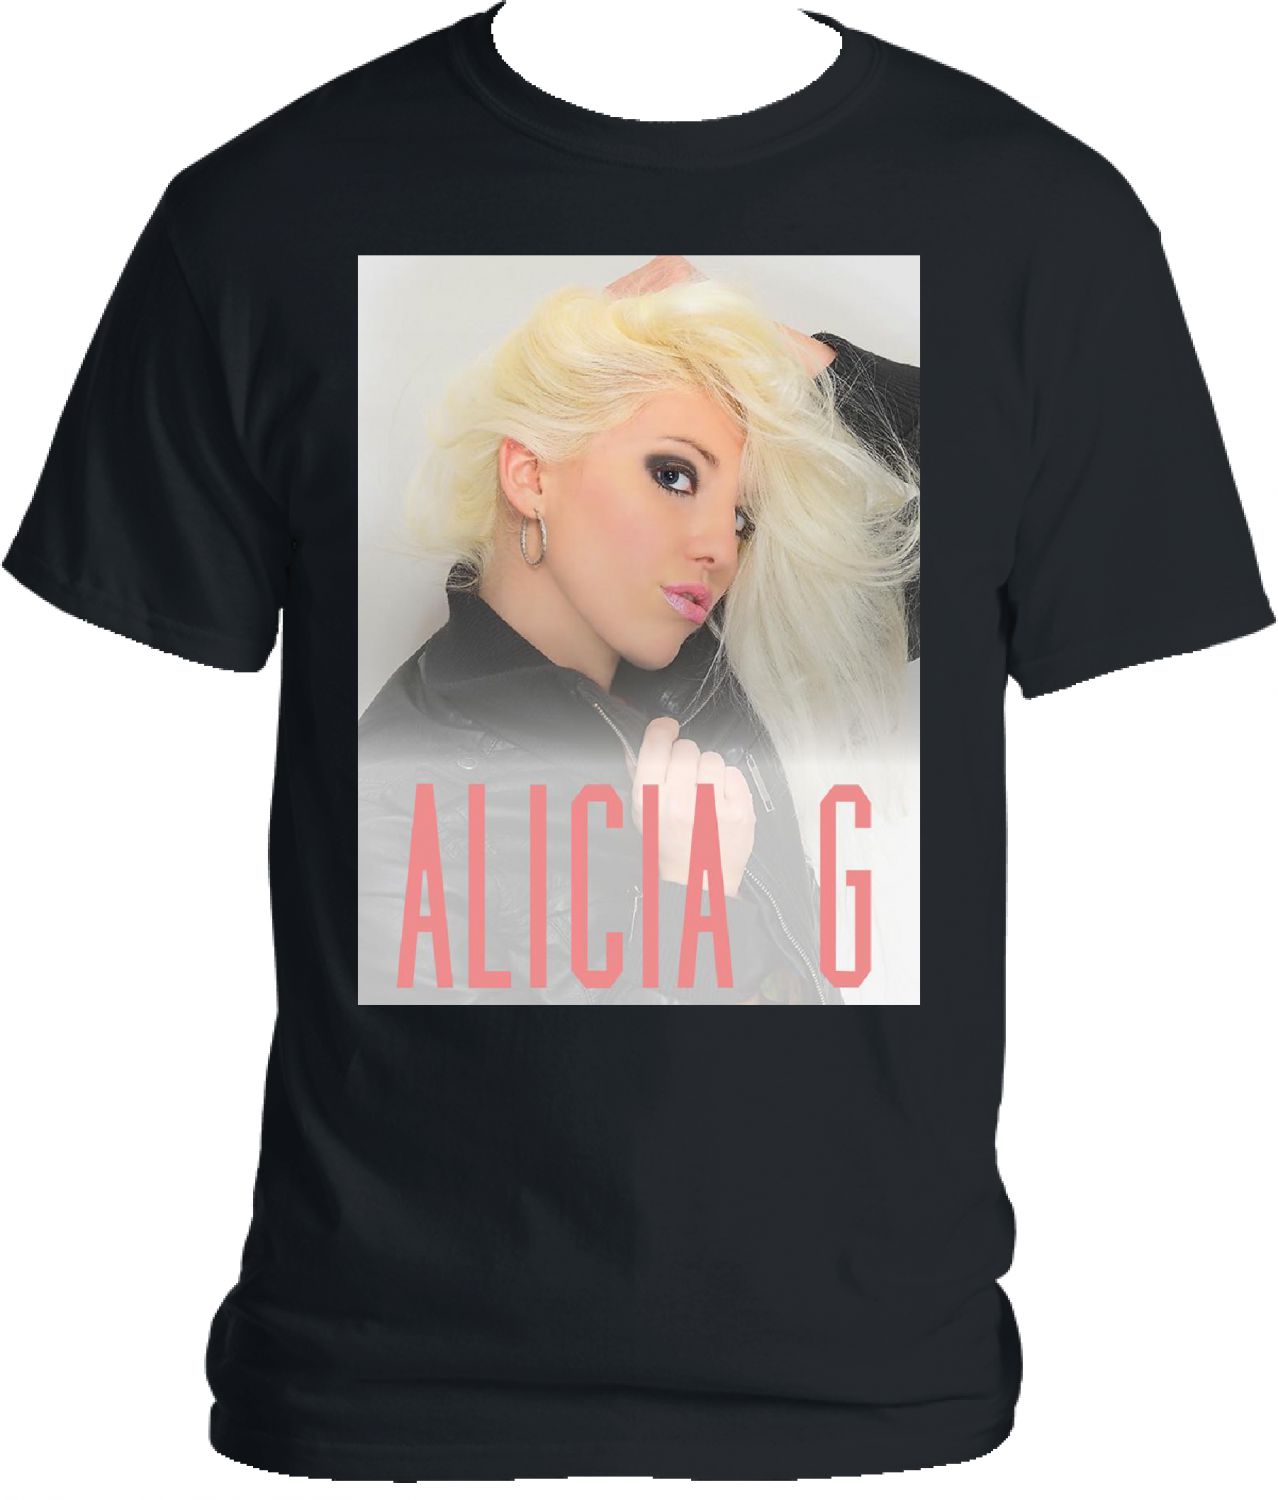 Alicia G Black Photo T-shirt